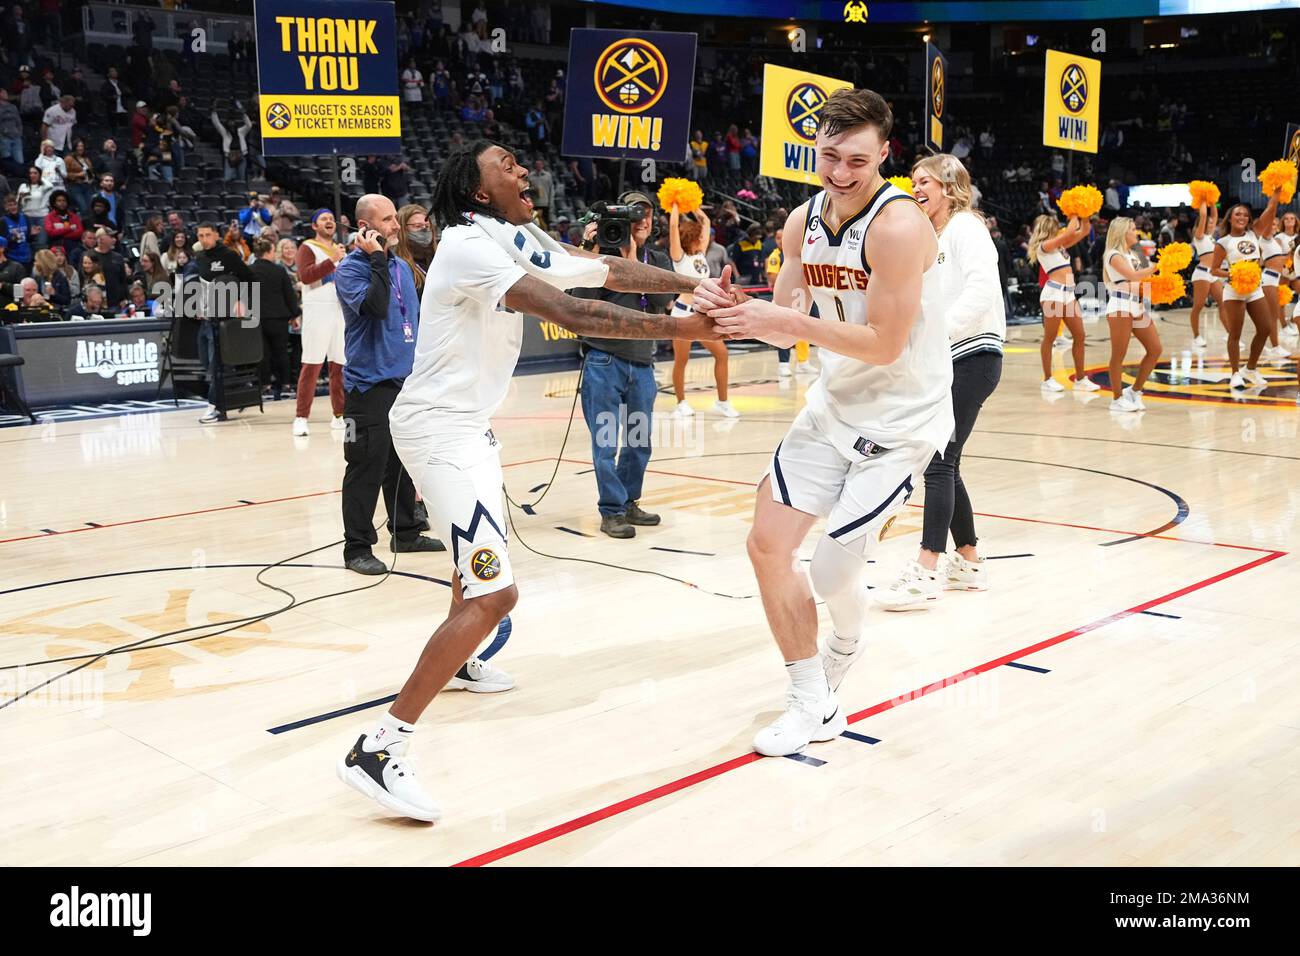 NBA - The Denver Nuggets got the win as Bones Hyland